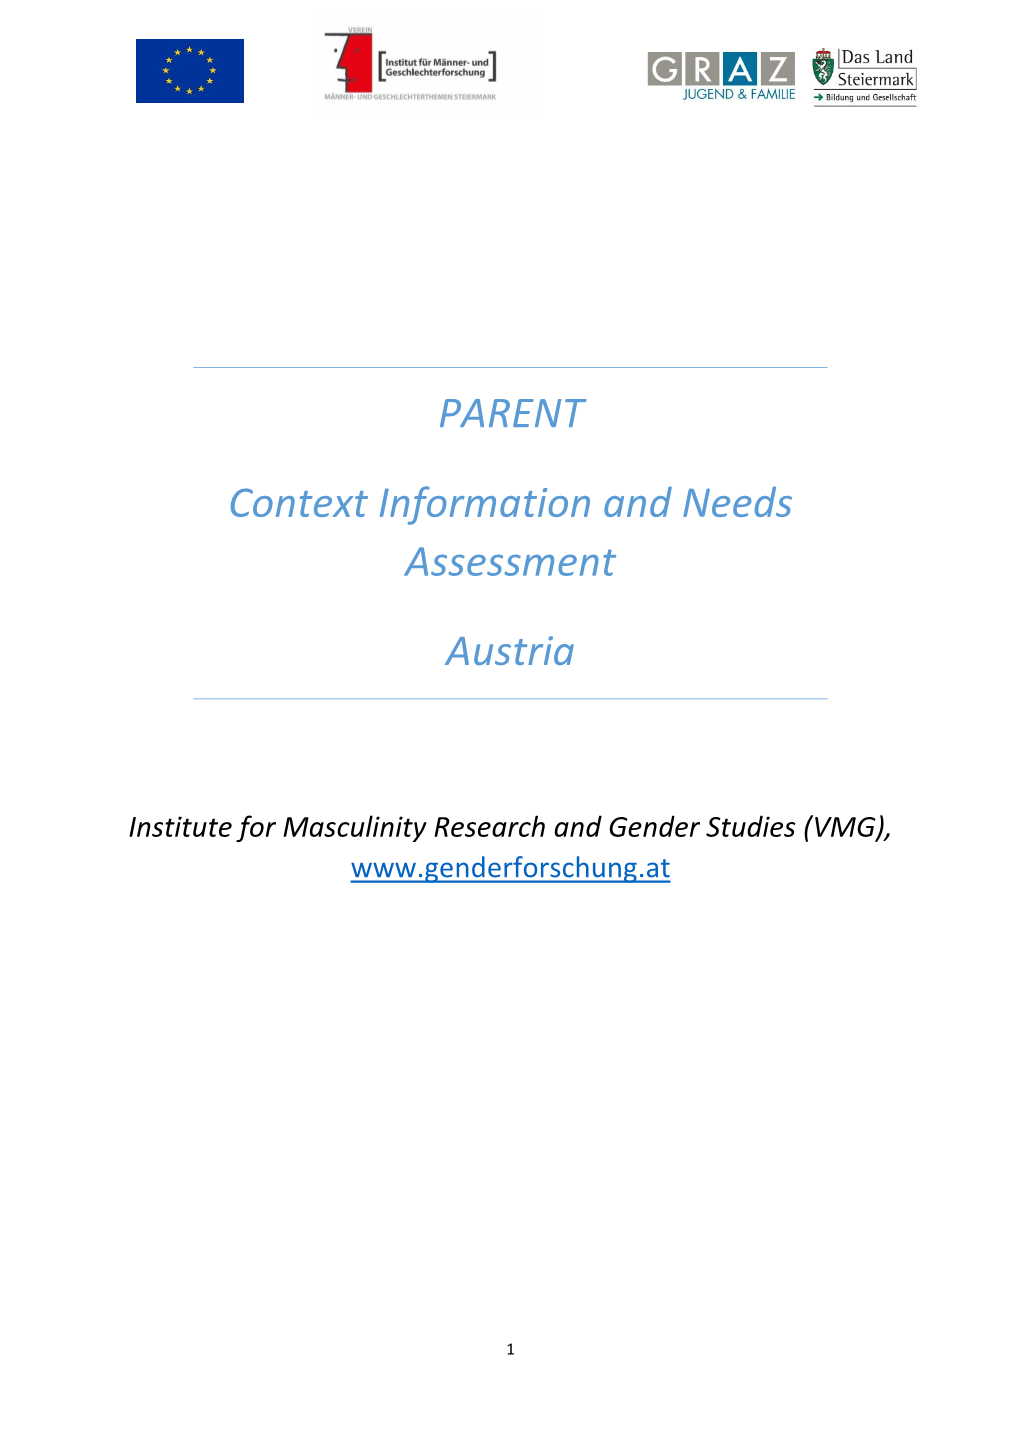 PARENT Context Information and Needs Assessment Austria